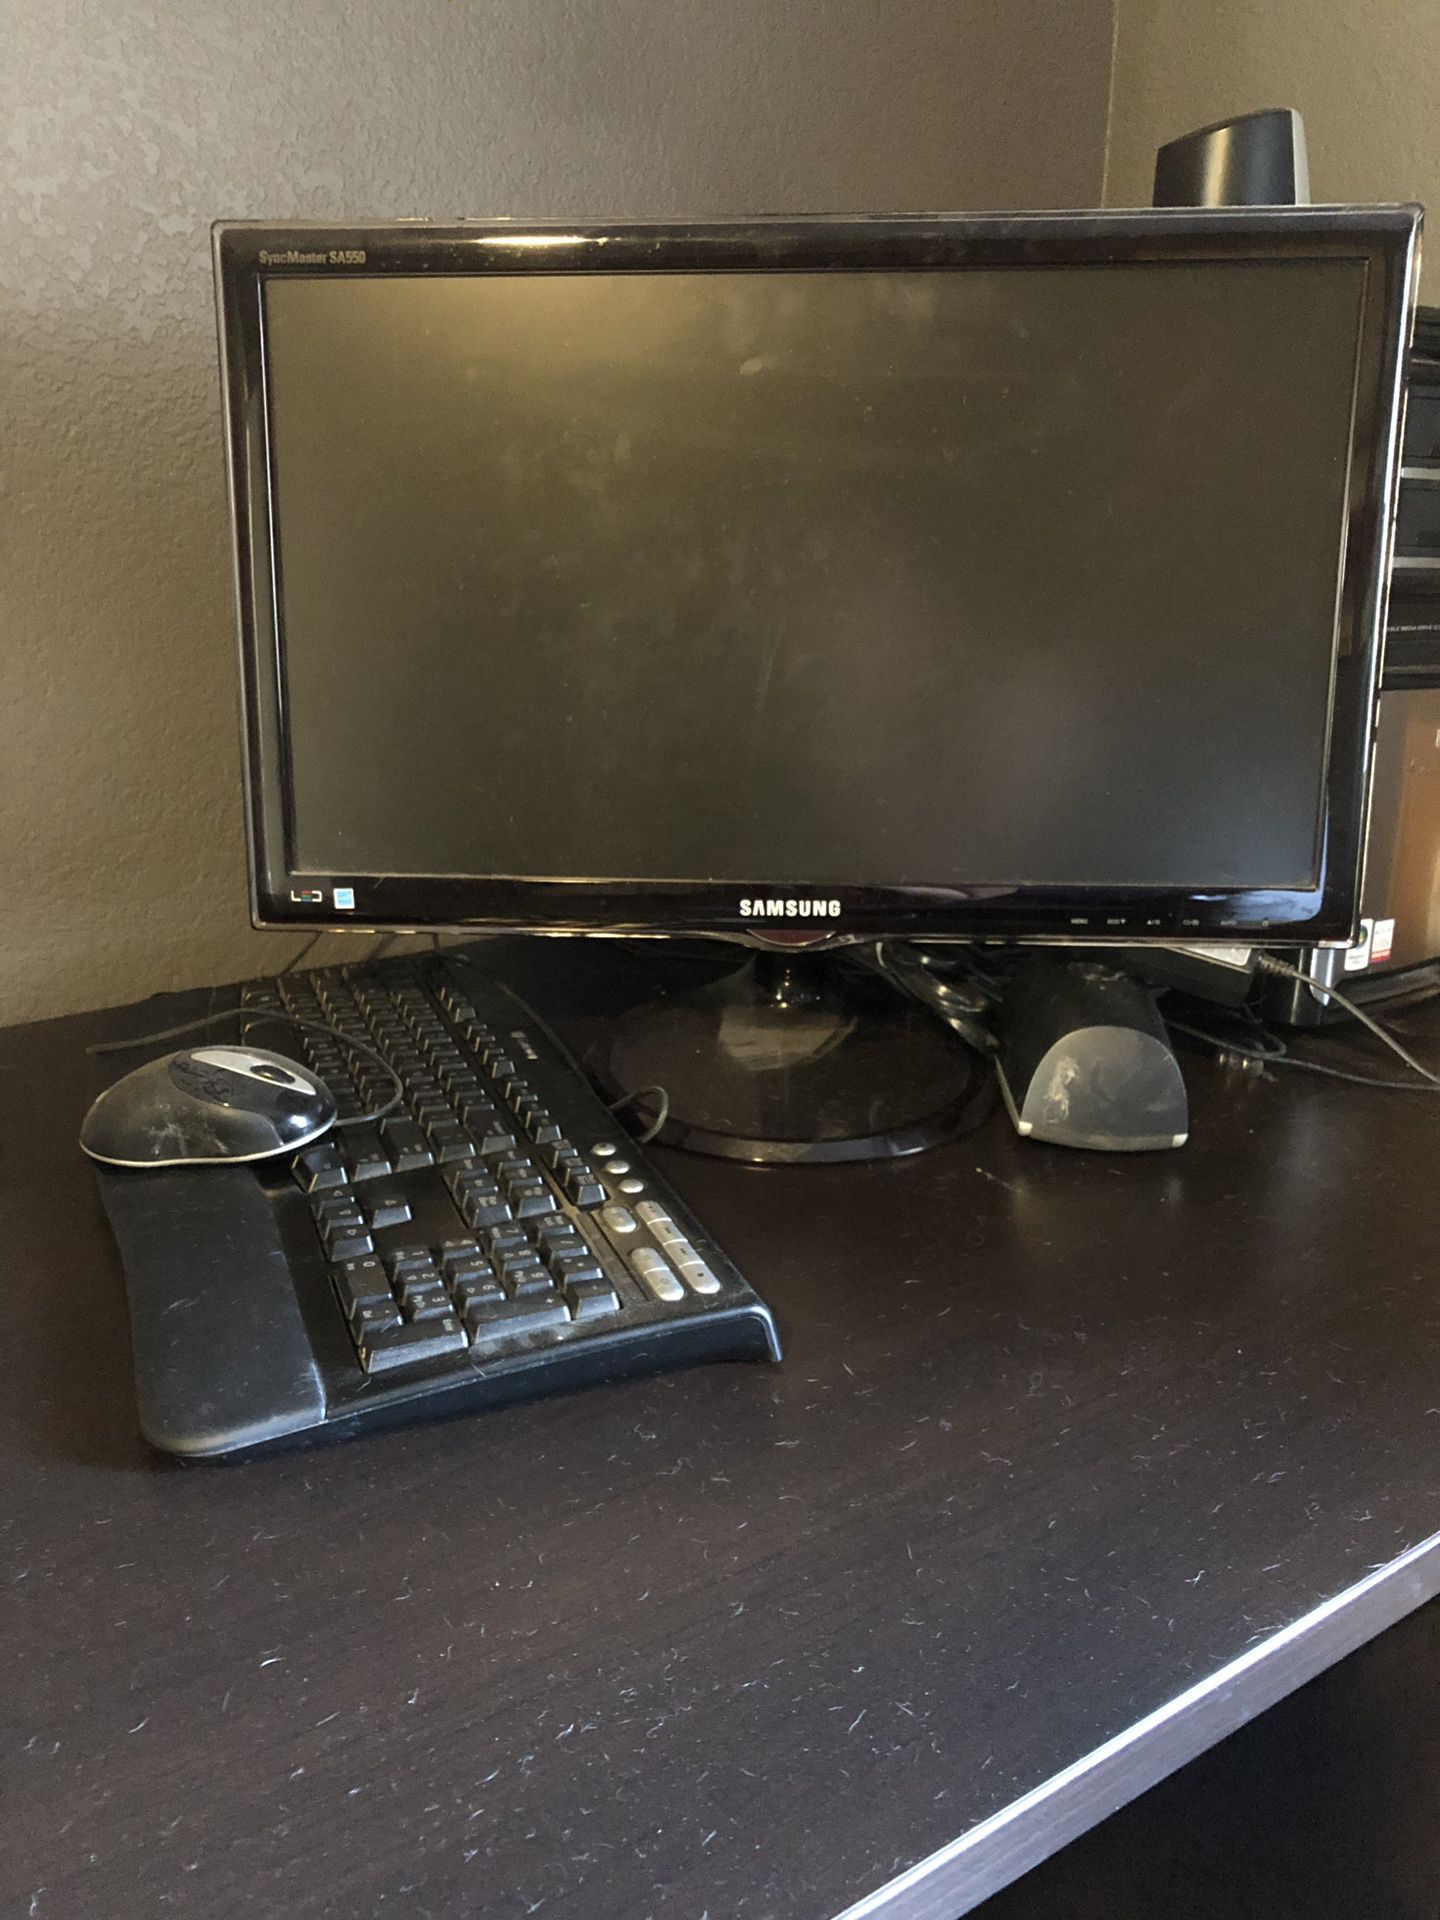 Large Samsung computer monitor